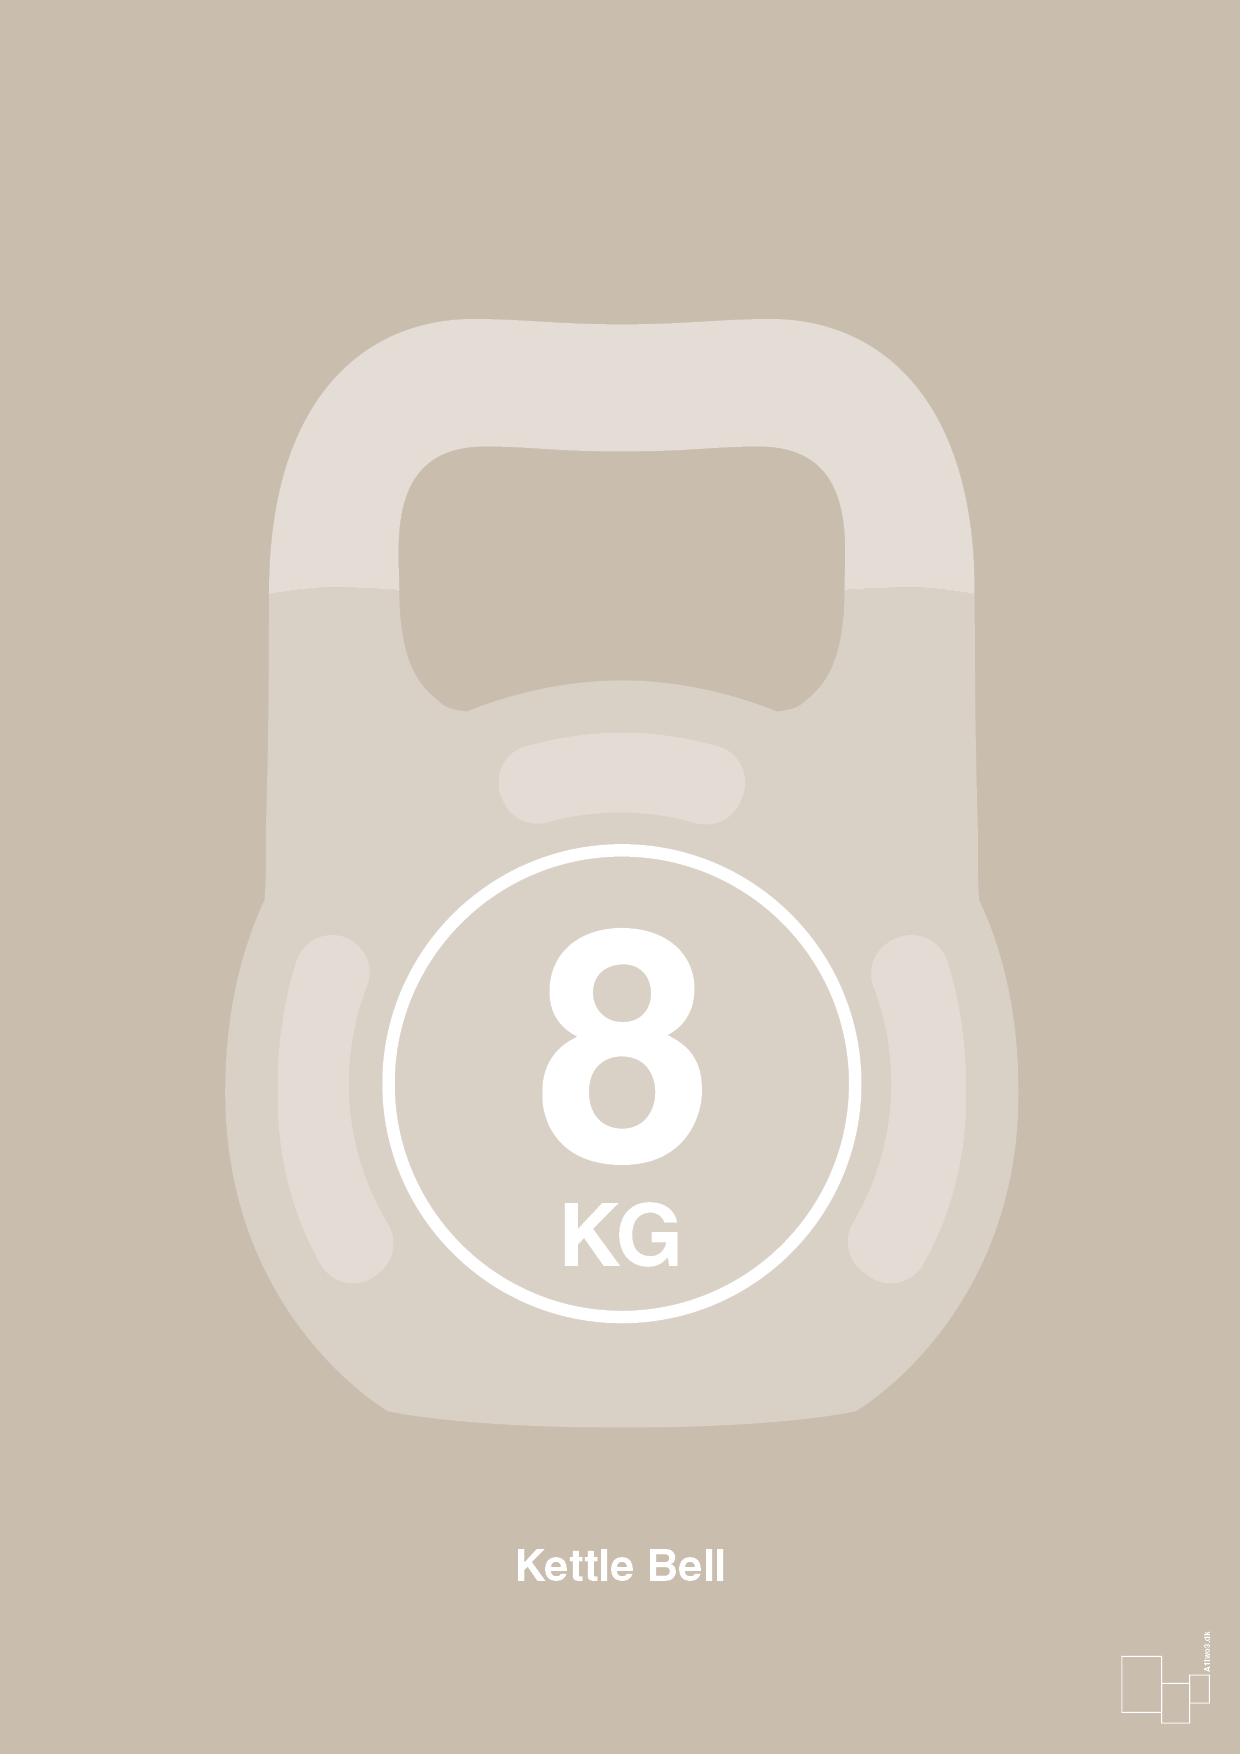 kettle bell 8 kg - Plakat med Grafik i Creamy Mushroom